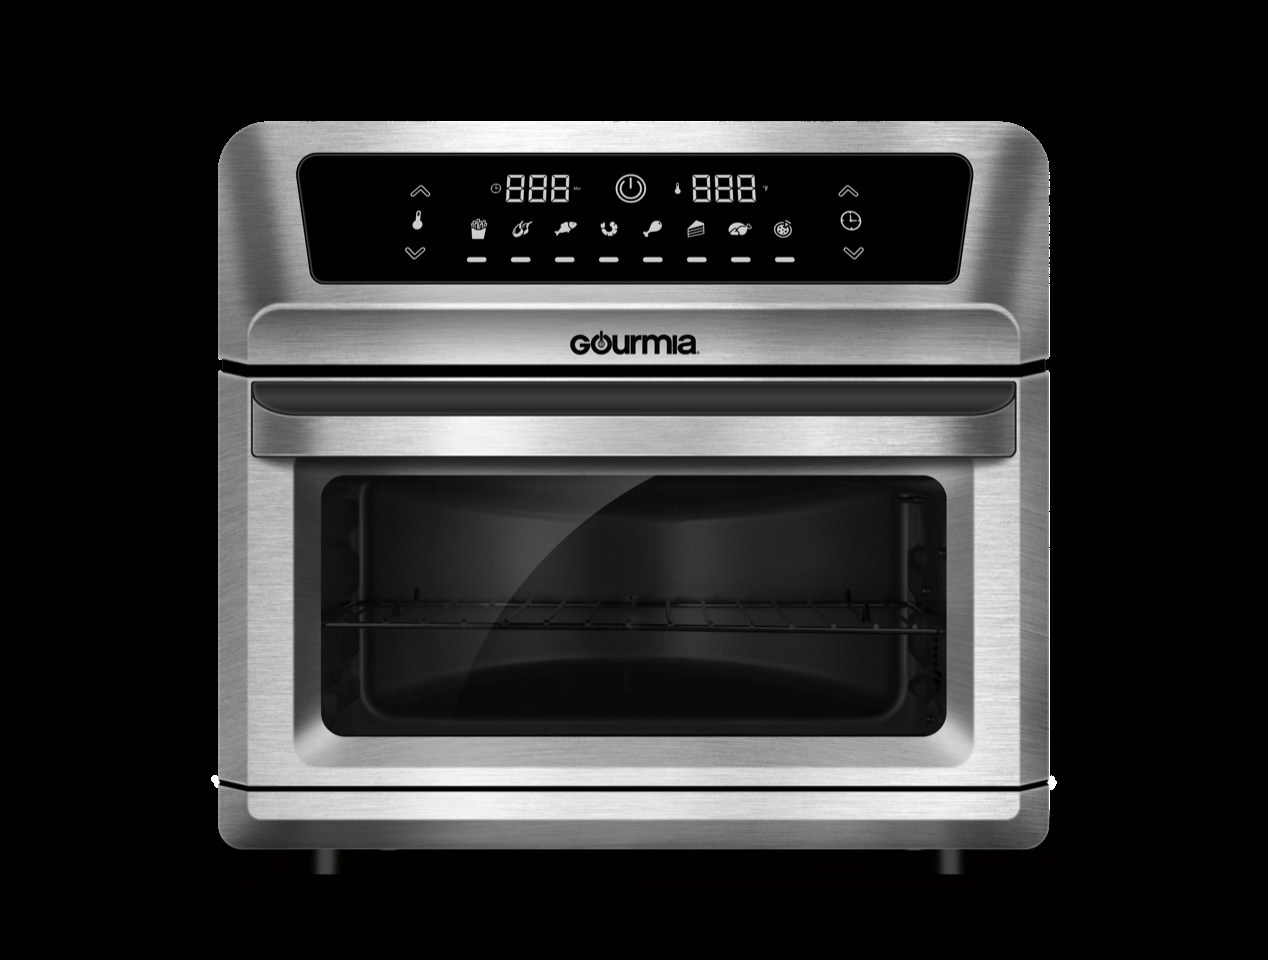 https://www.kitchenwarenews.com/wp-content/uploads/2019/03/Gourmia___Toaster_Oven_Air_Fryer.jpg